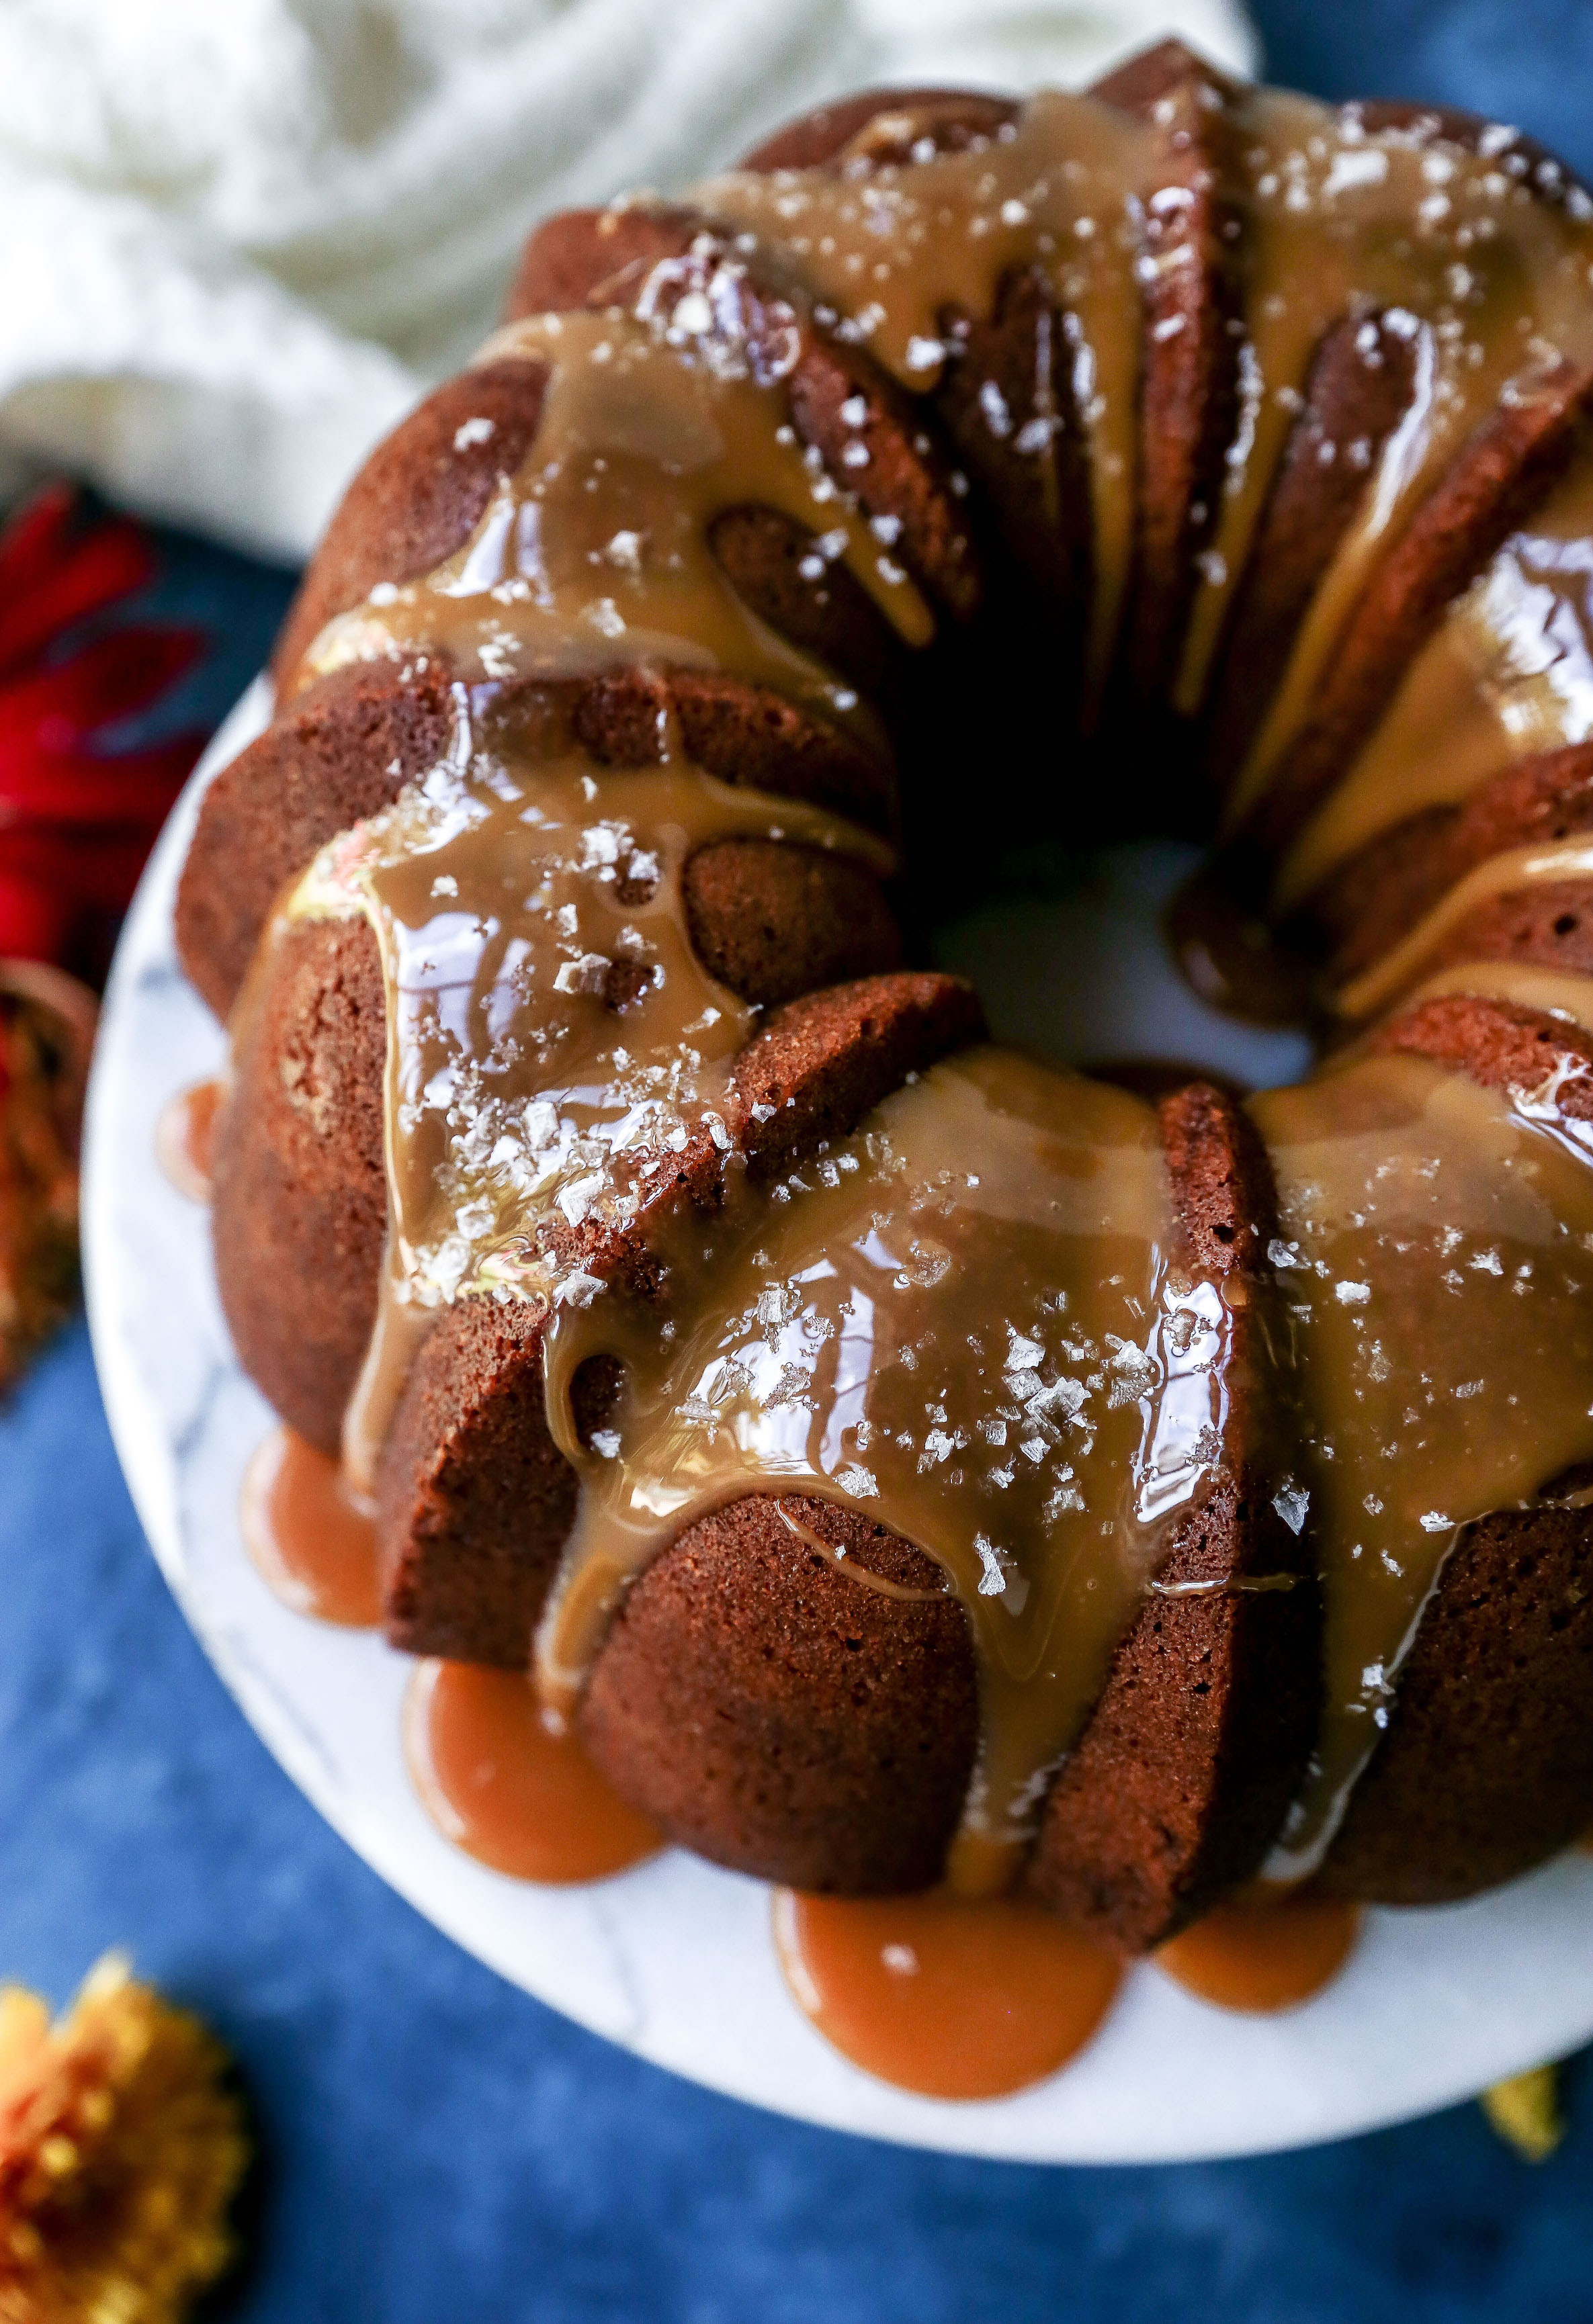 Brown Sugar Bundt Cake with Caramel Glaze - The Beach House Kitchen